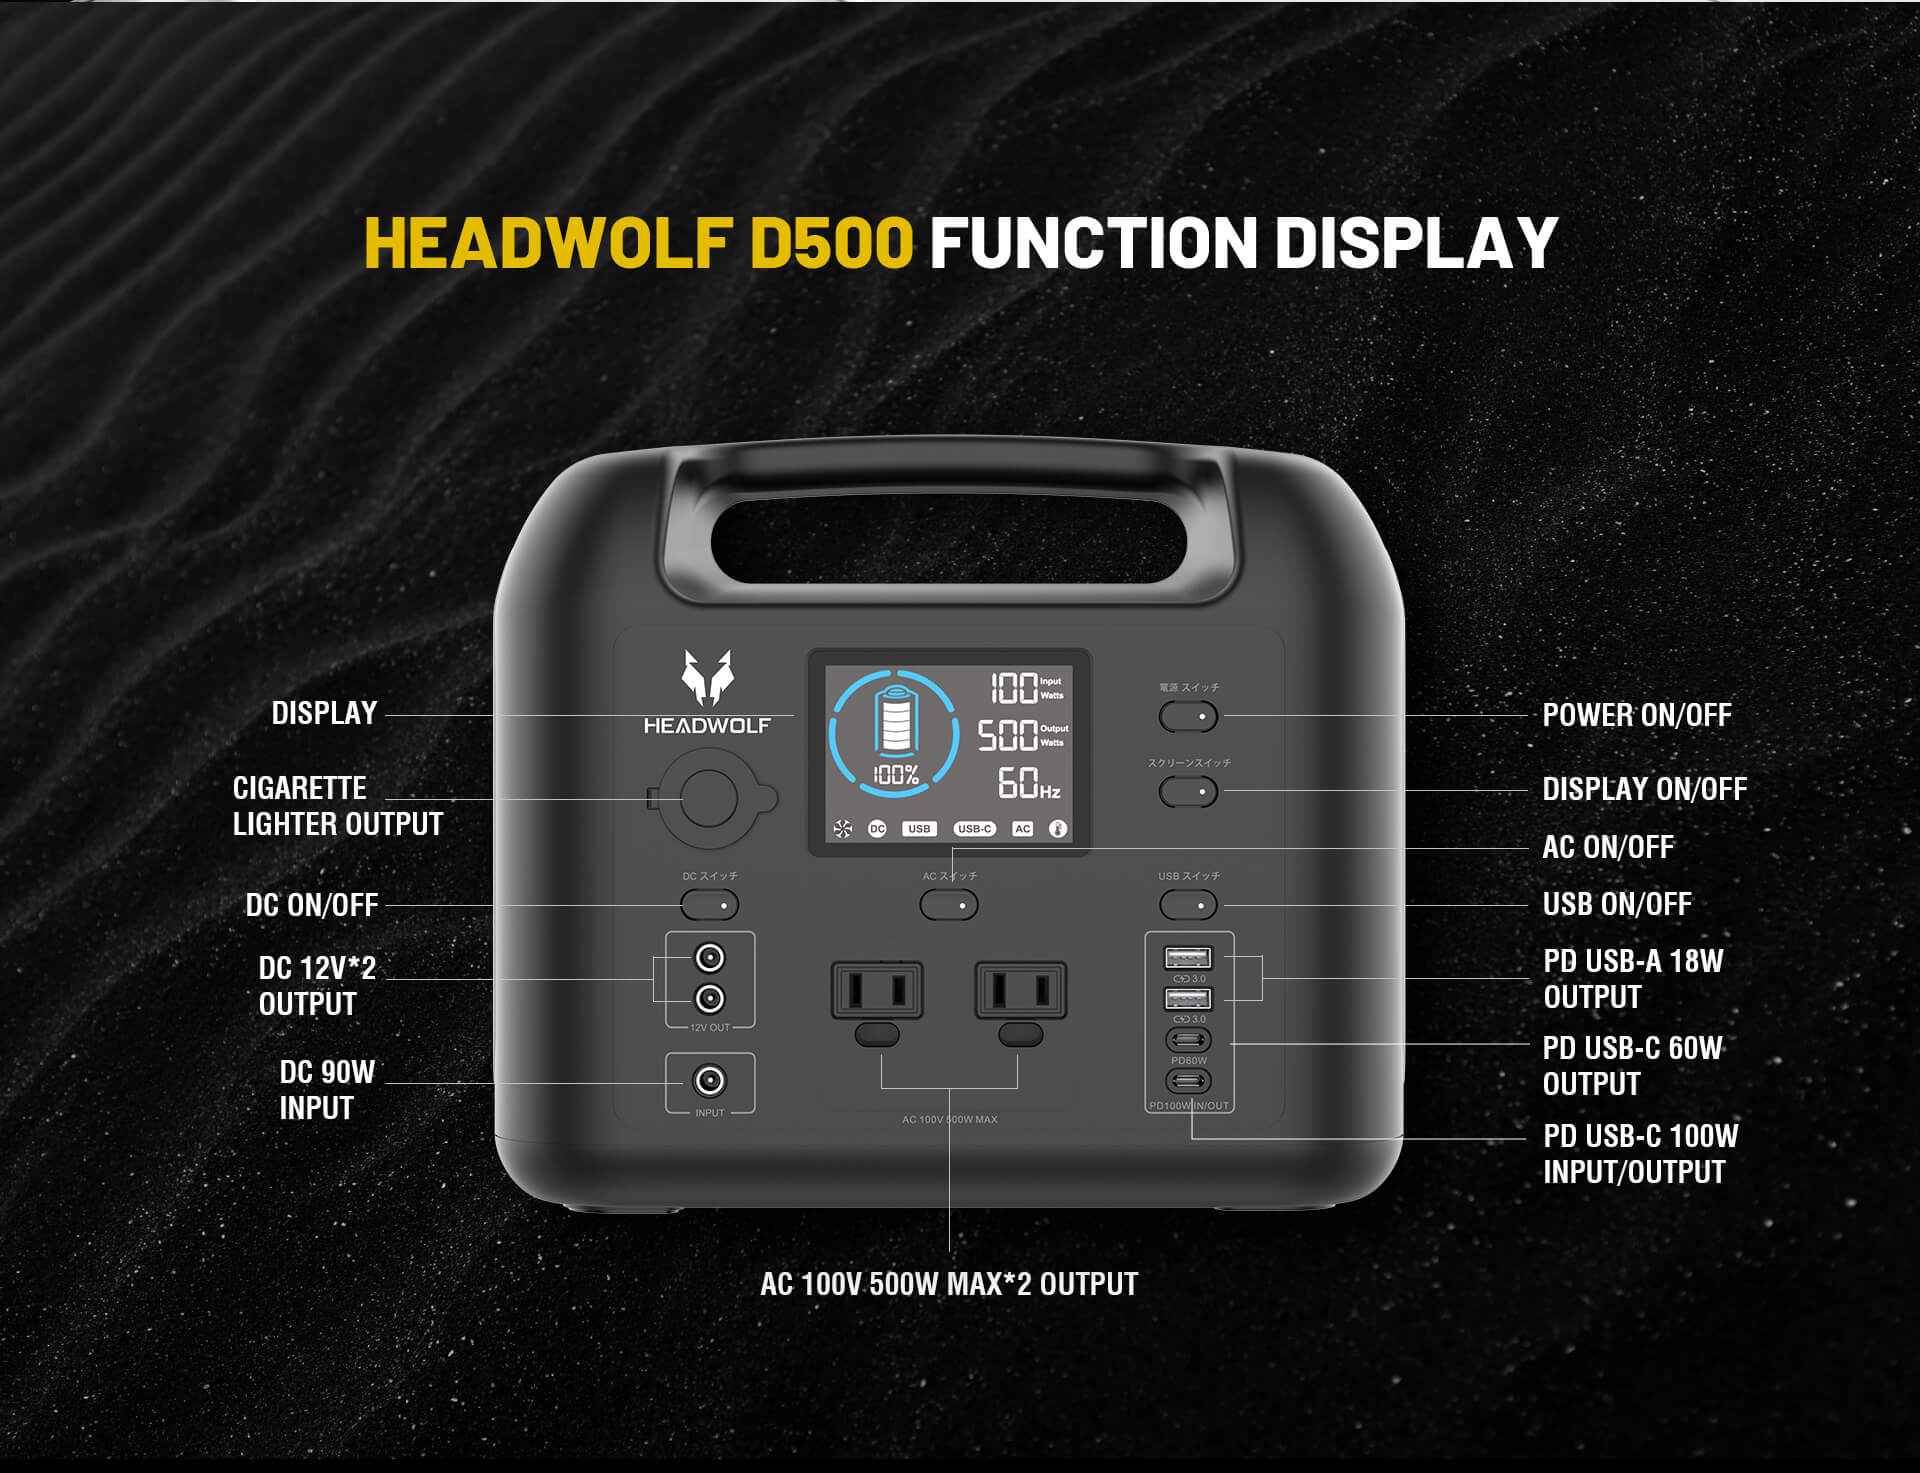 Headwolf D500 Function Display